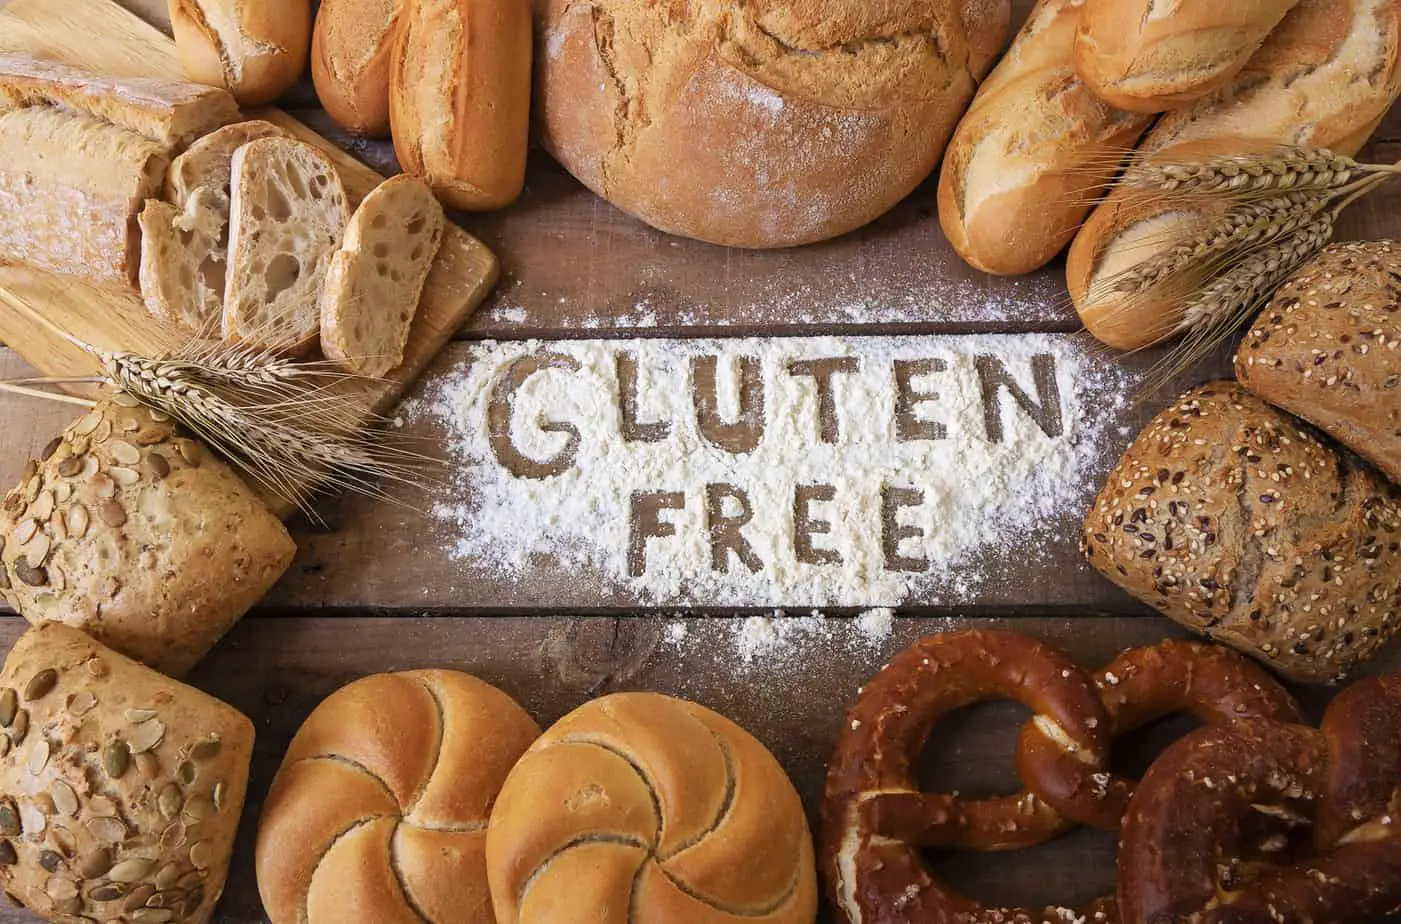 A gluten free breads